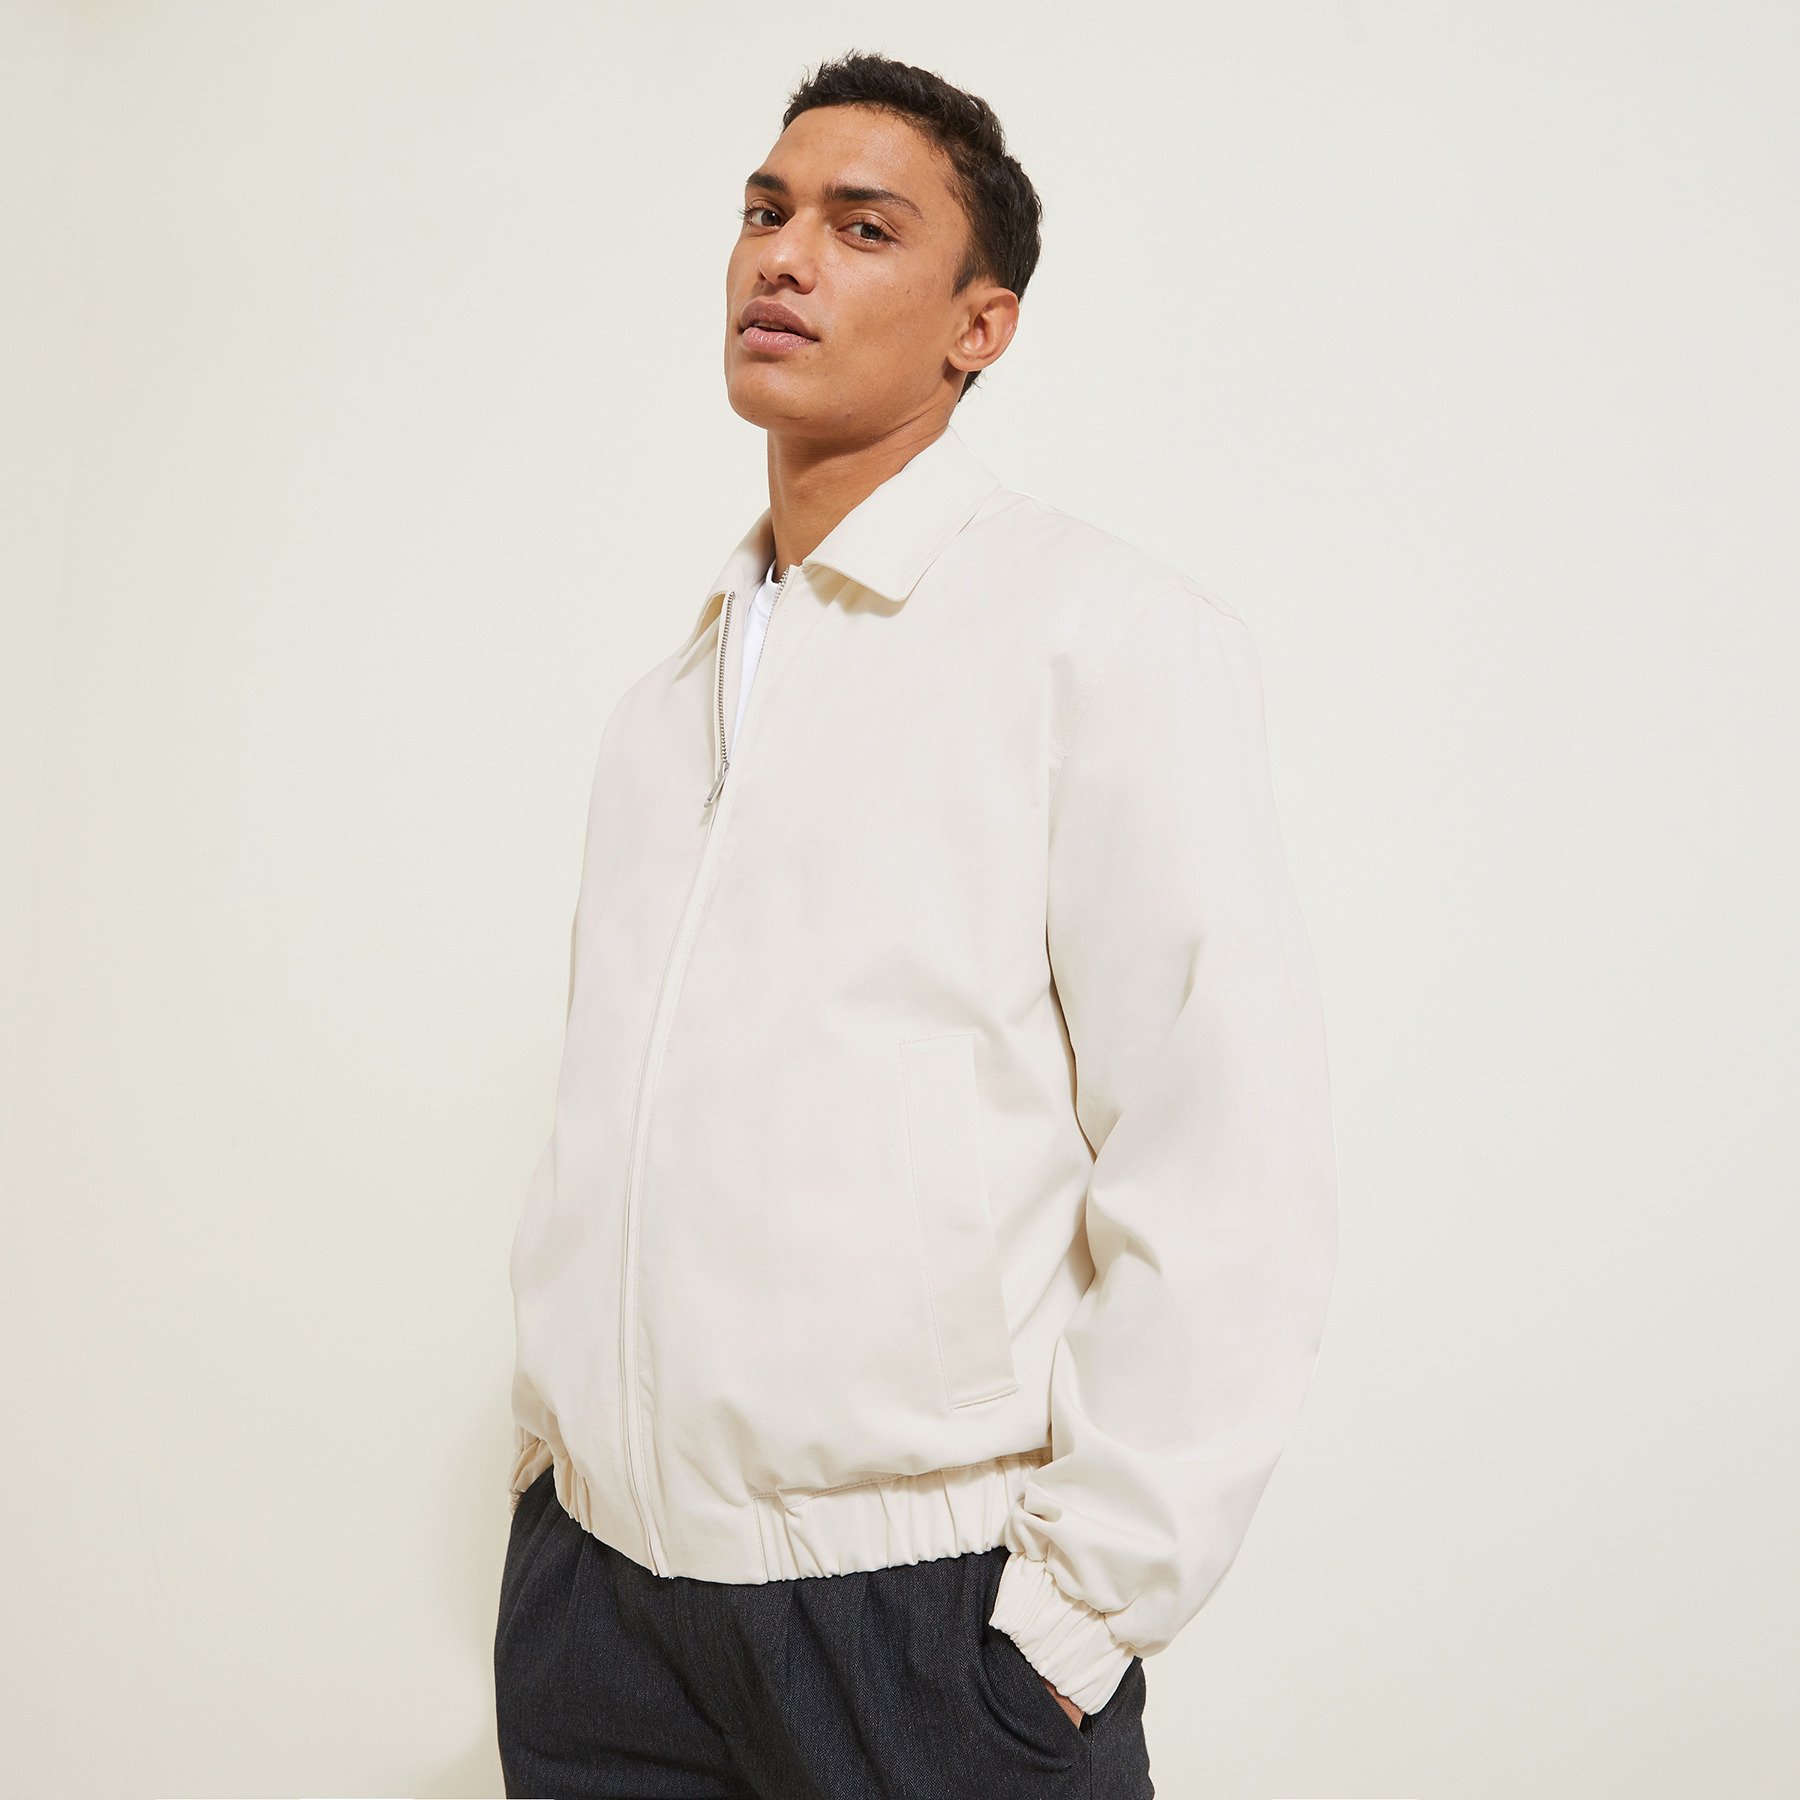 Blouson urbain col chemise Beige S 100% Polyester, 98% Coton, 2% Elasthanne Homme